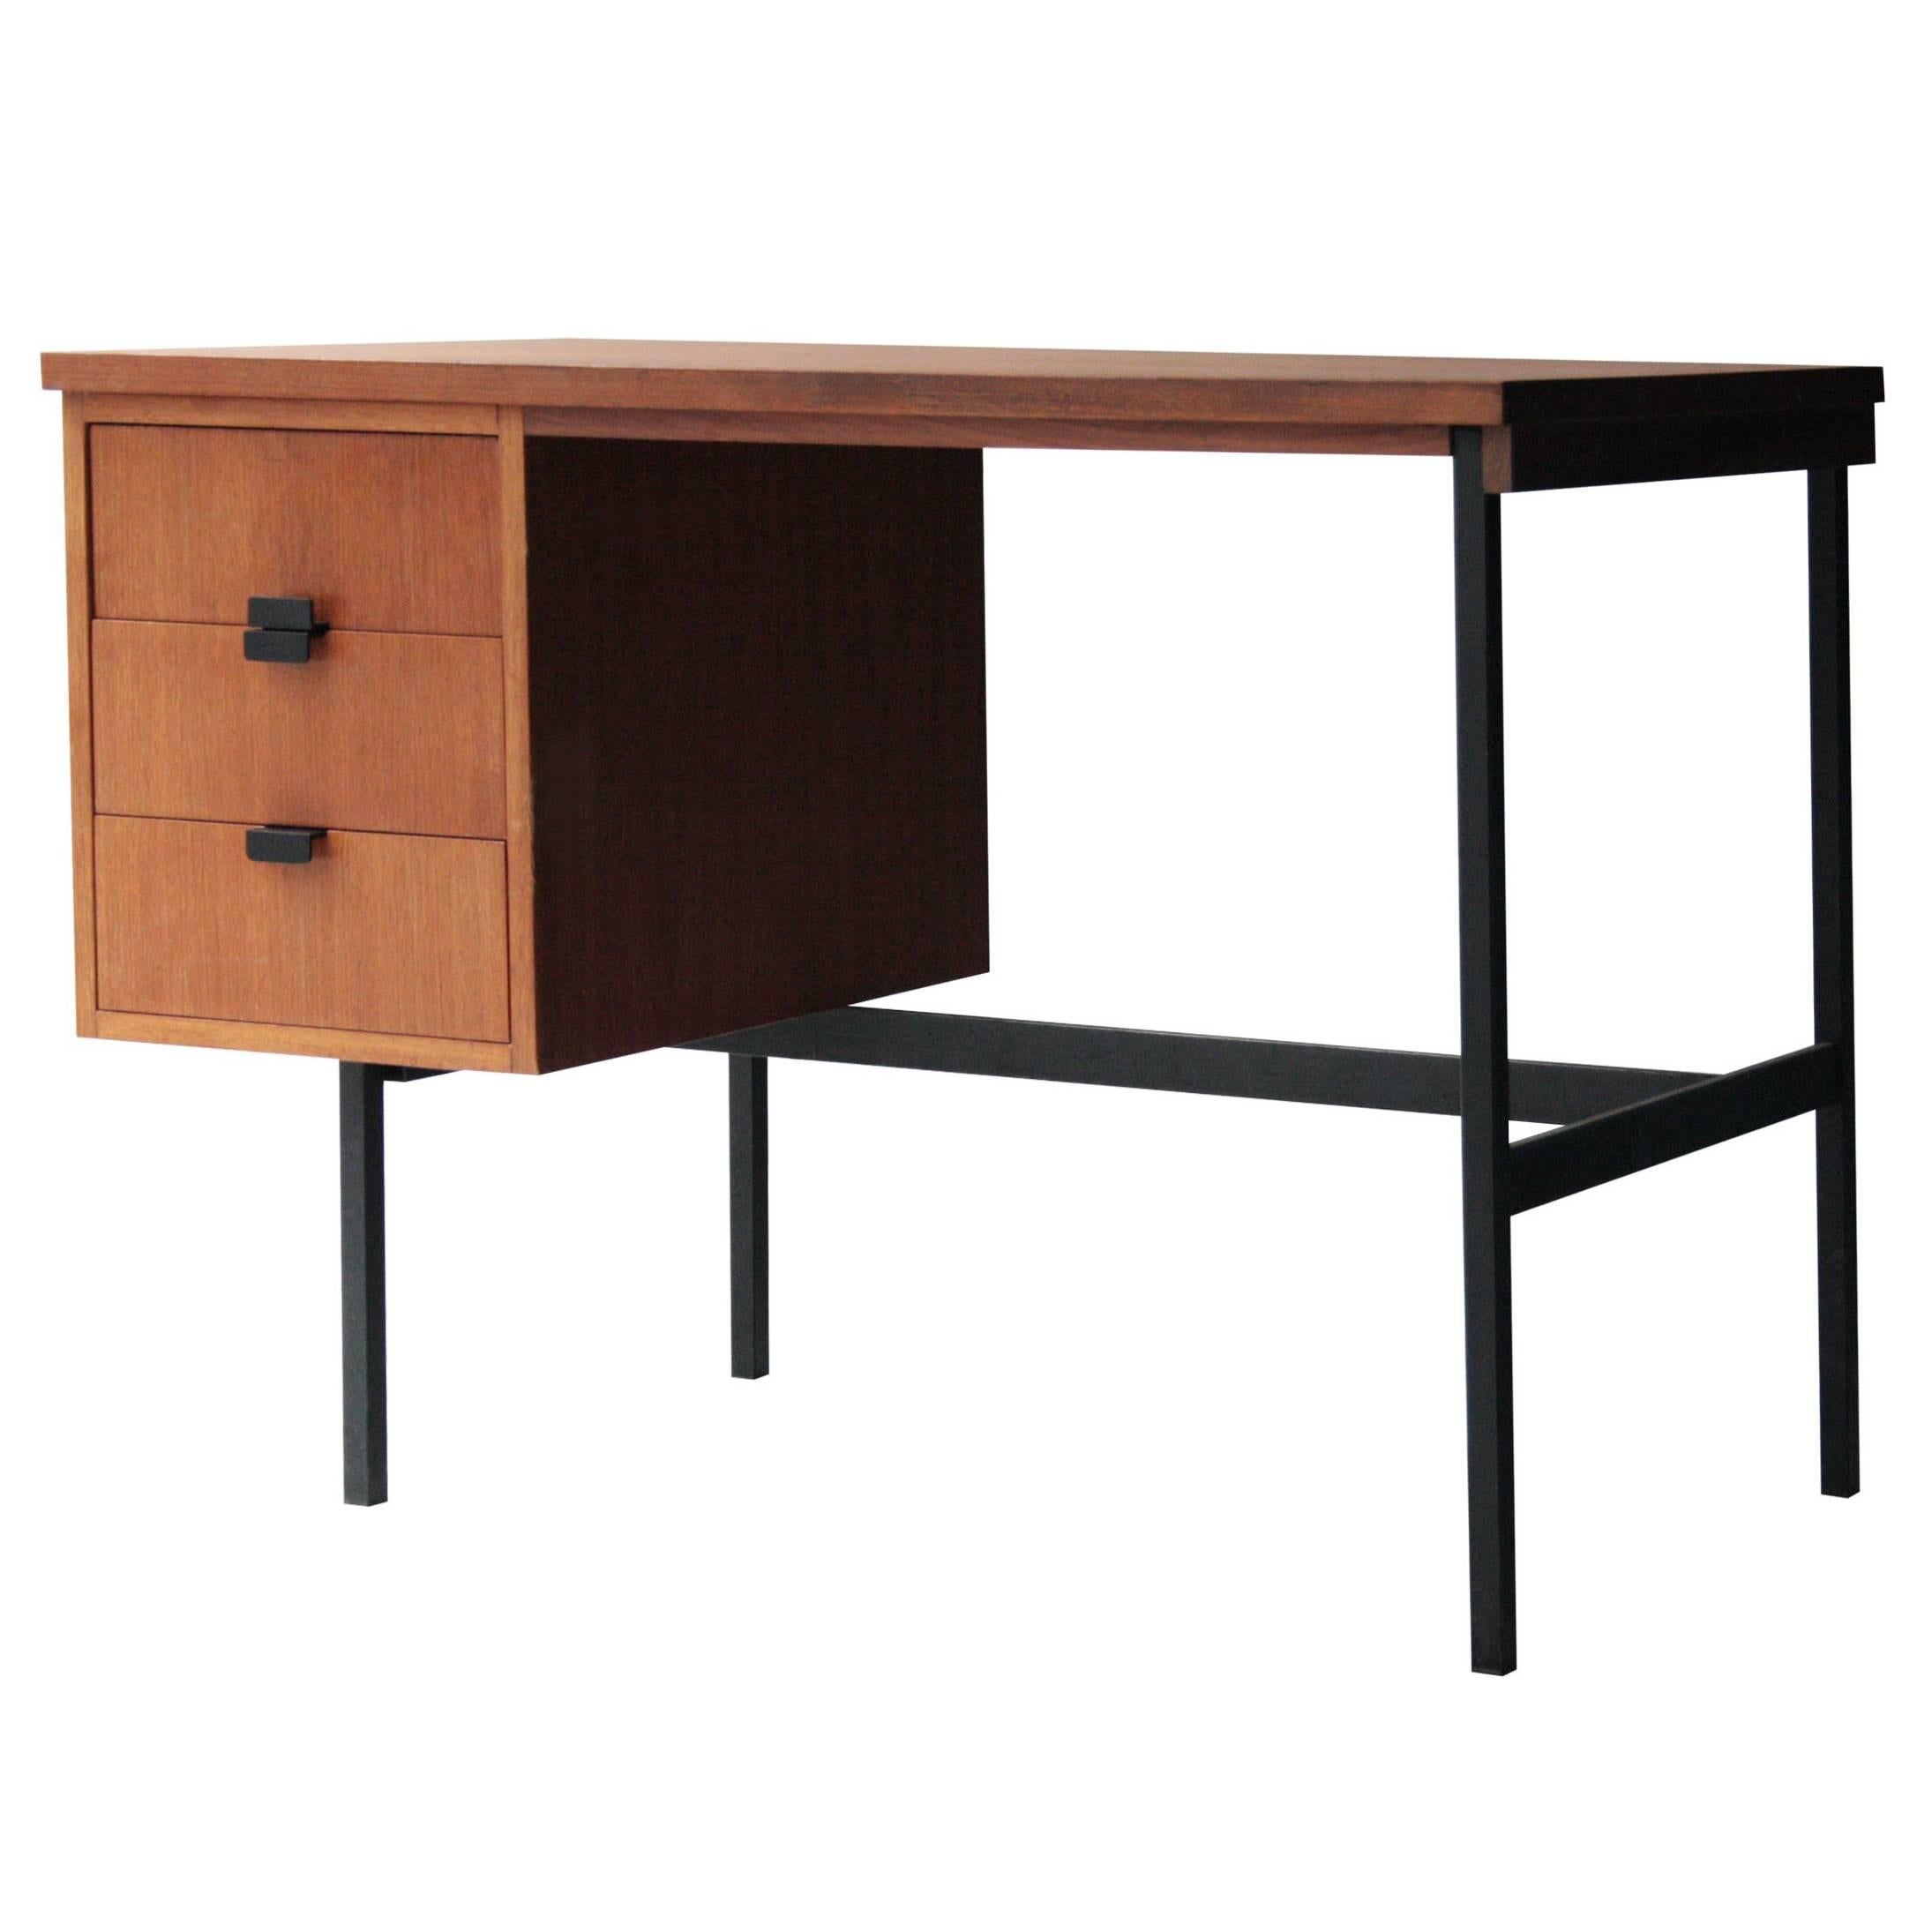 Desk Designed by Cees Braakman. Netherlands, 1950.